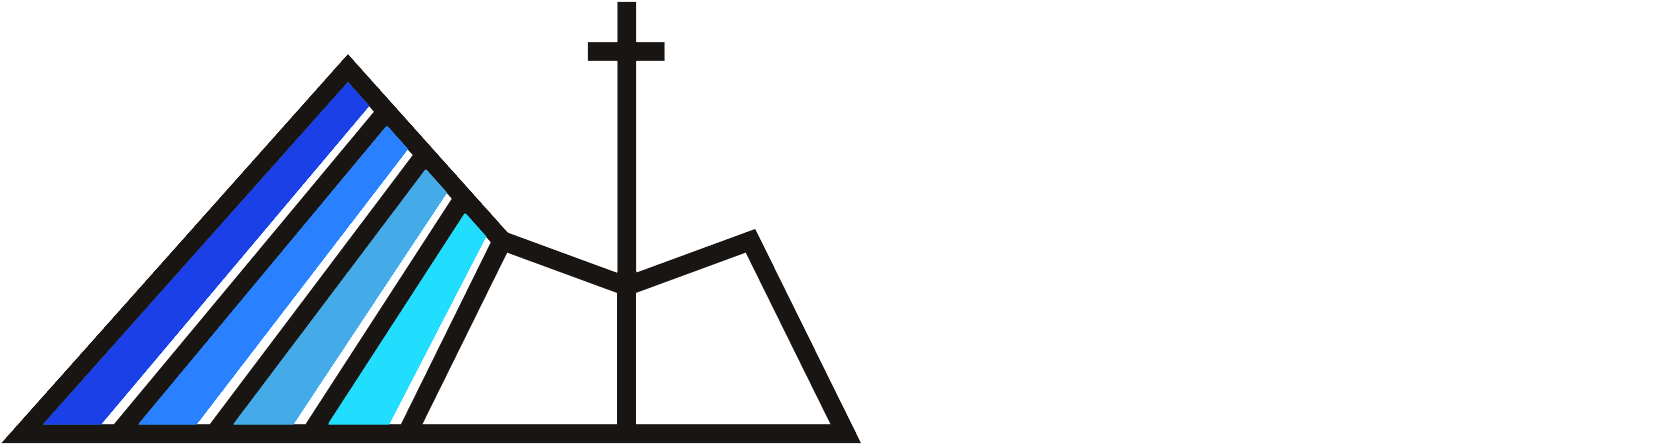 Clairemont Lutheran Church / Iglesia Luterana - Clairemont Lutheran Church (1700x480)